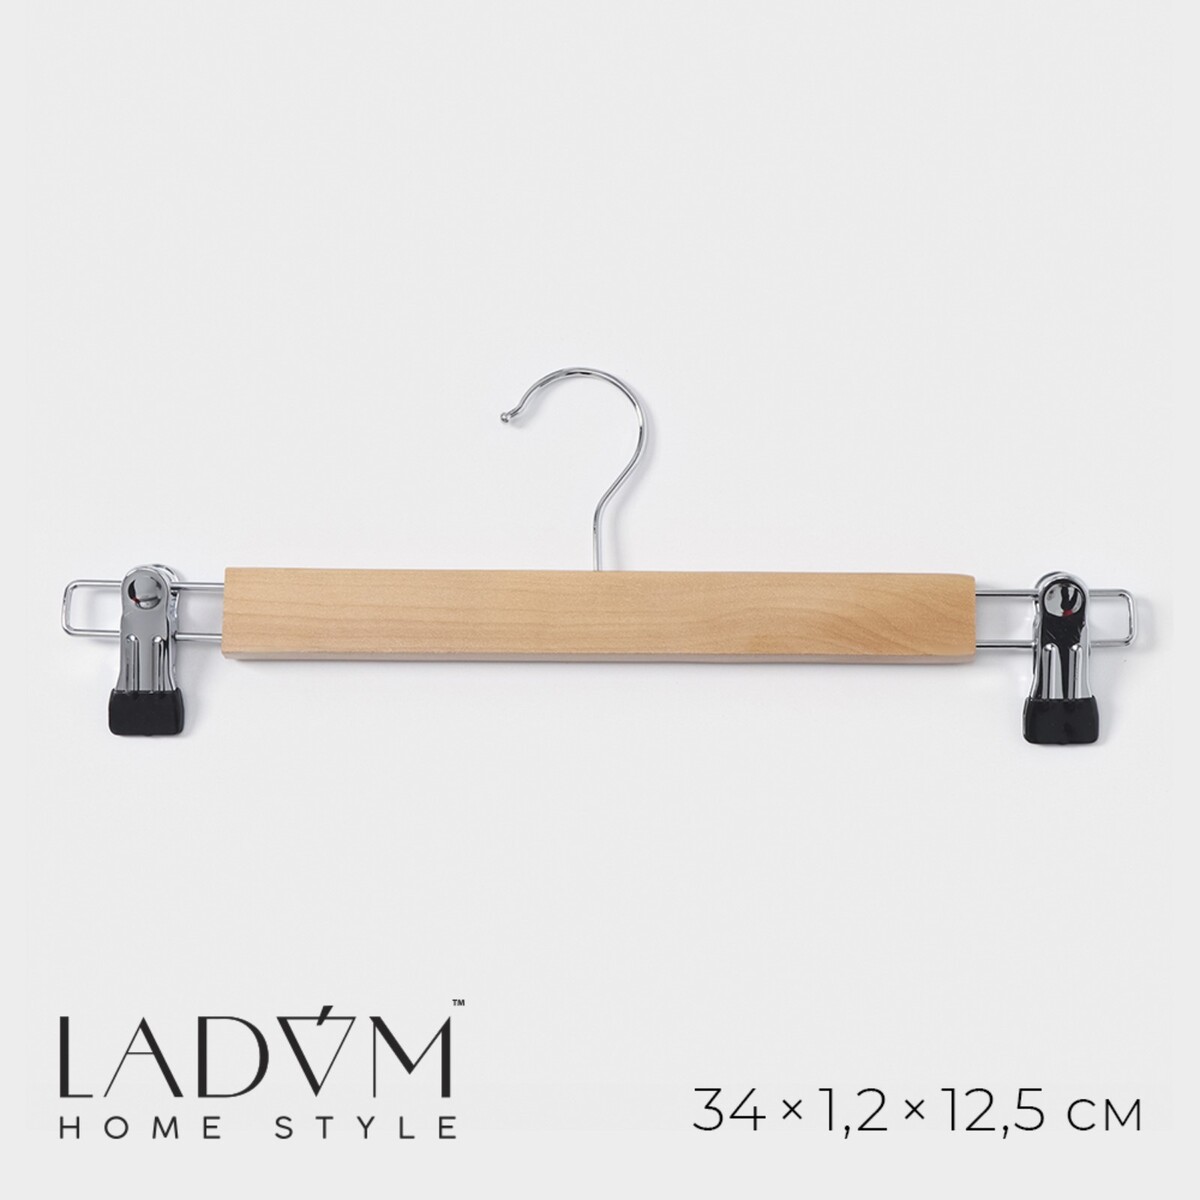 Вешалка для брюк и юбок с зажимами ladо́m bois, 34,5×1,2×12,5 см, сорт а, цвет светлое дерево bradex вешалка для брюк 5 в1 гинго